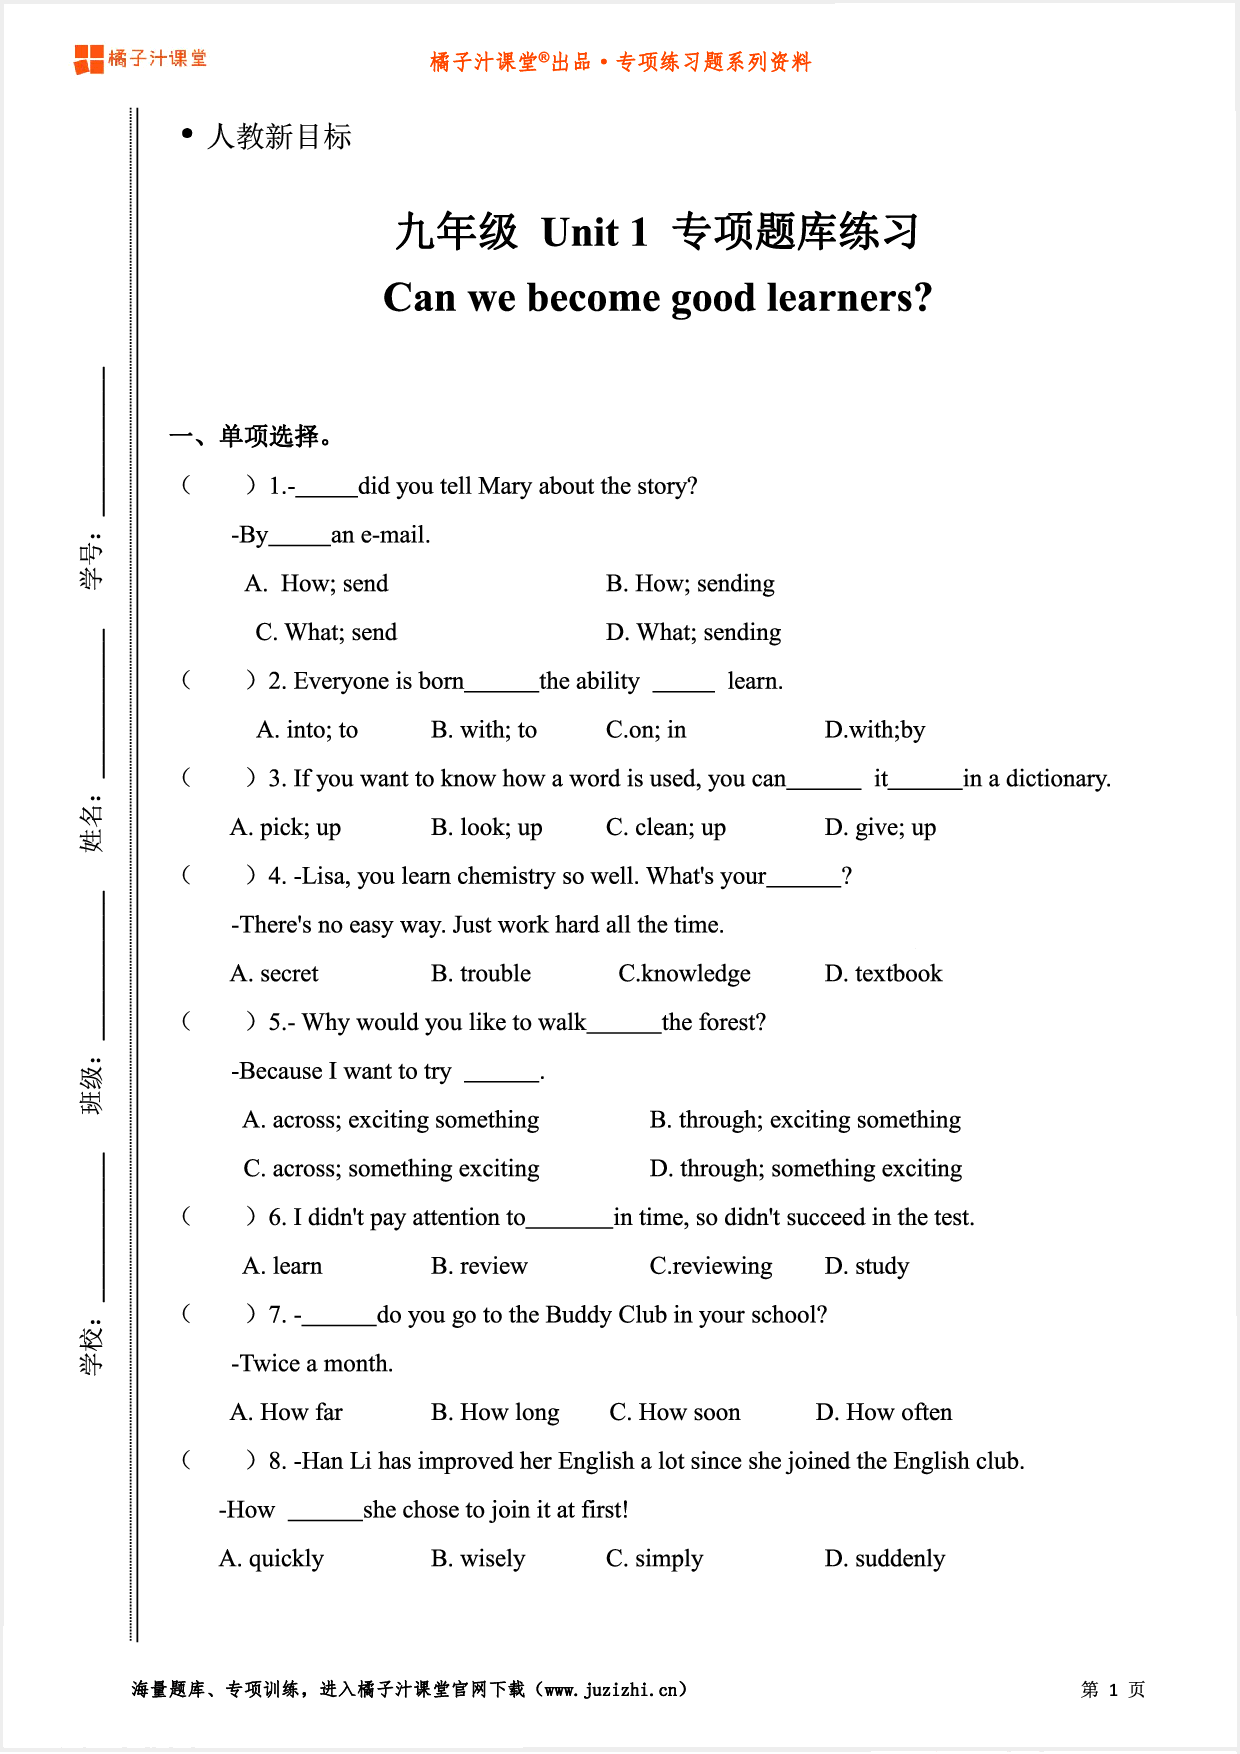 【人教新目标英语】九年级上册Unit 1《Can we become good learners?》专项练习题